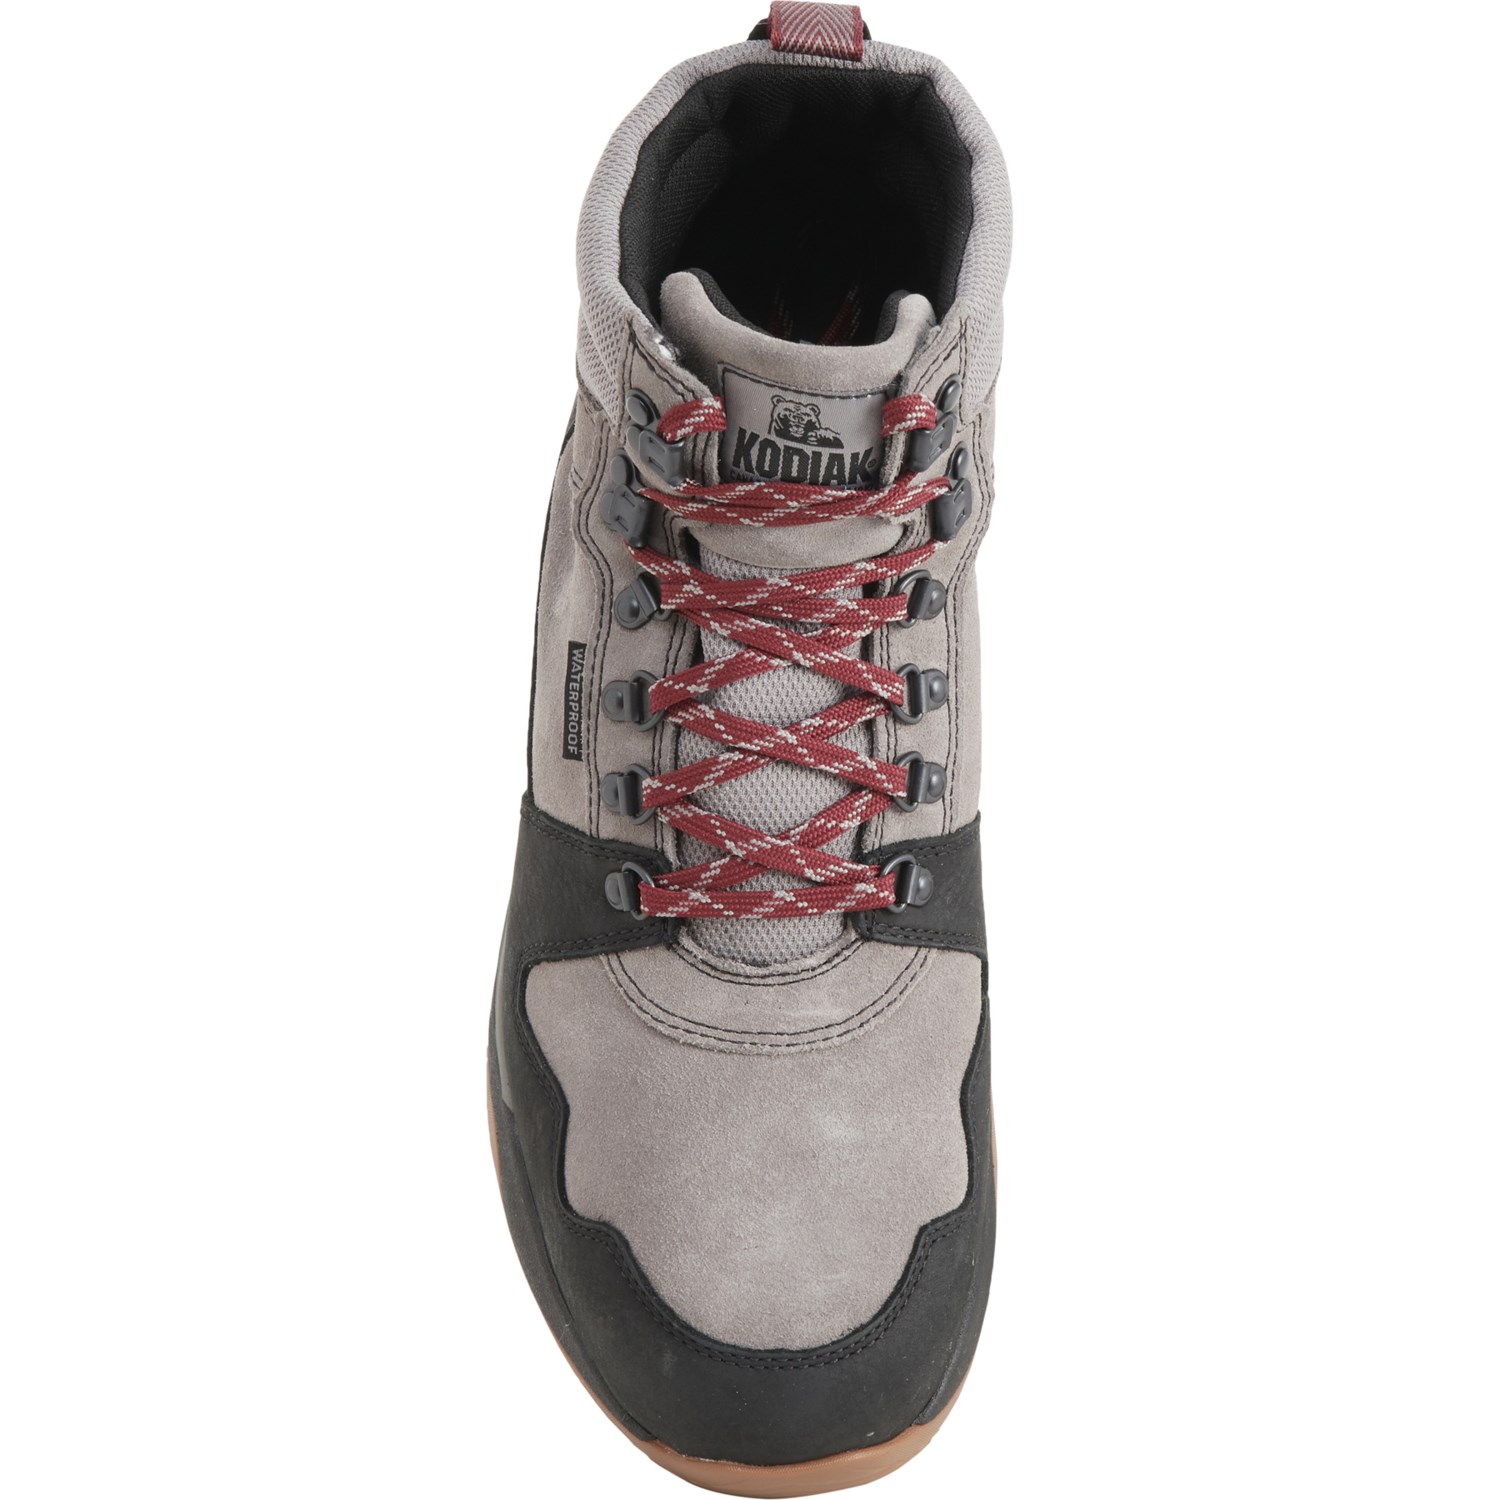 Kodiak Stave PrimaLoft® Mid-Cut Hiking Boots (For Men) - Save 50%